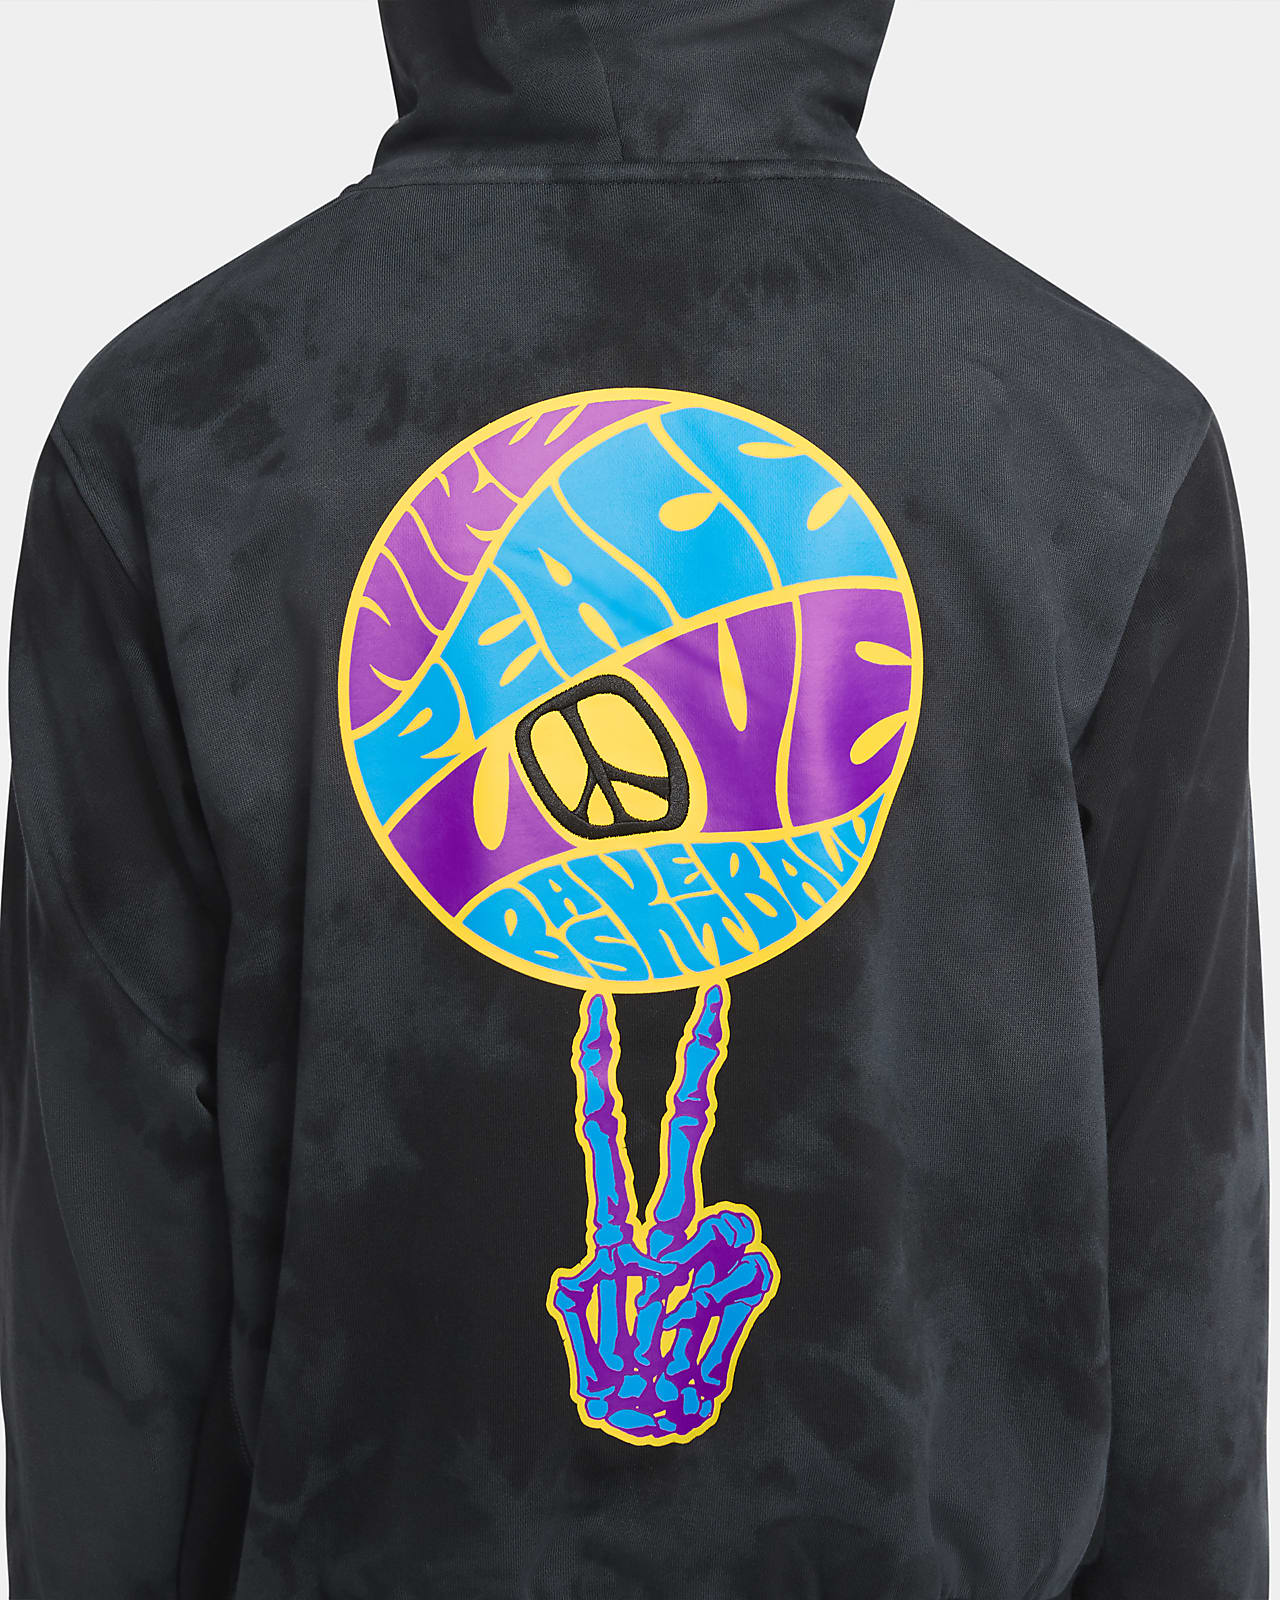 nike peace logo hoodie